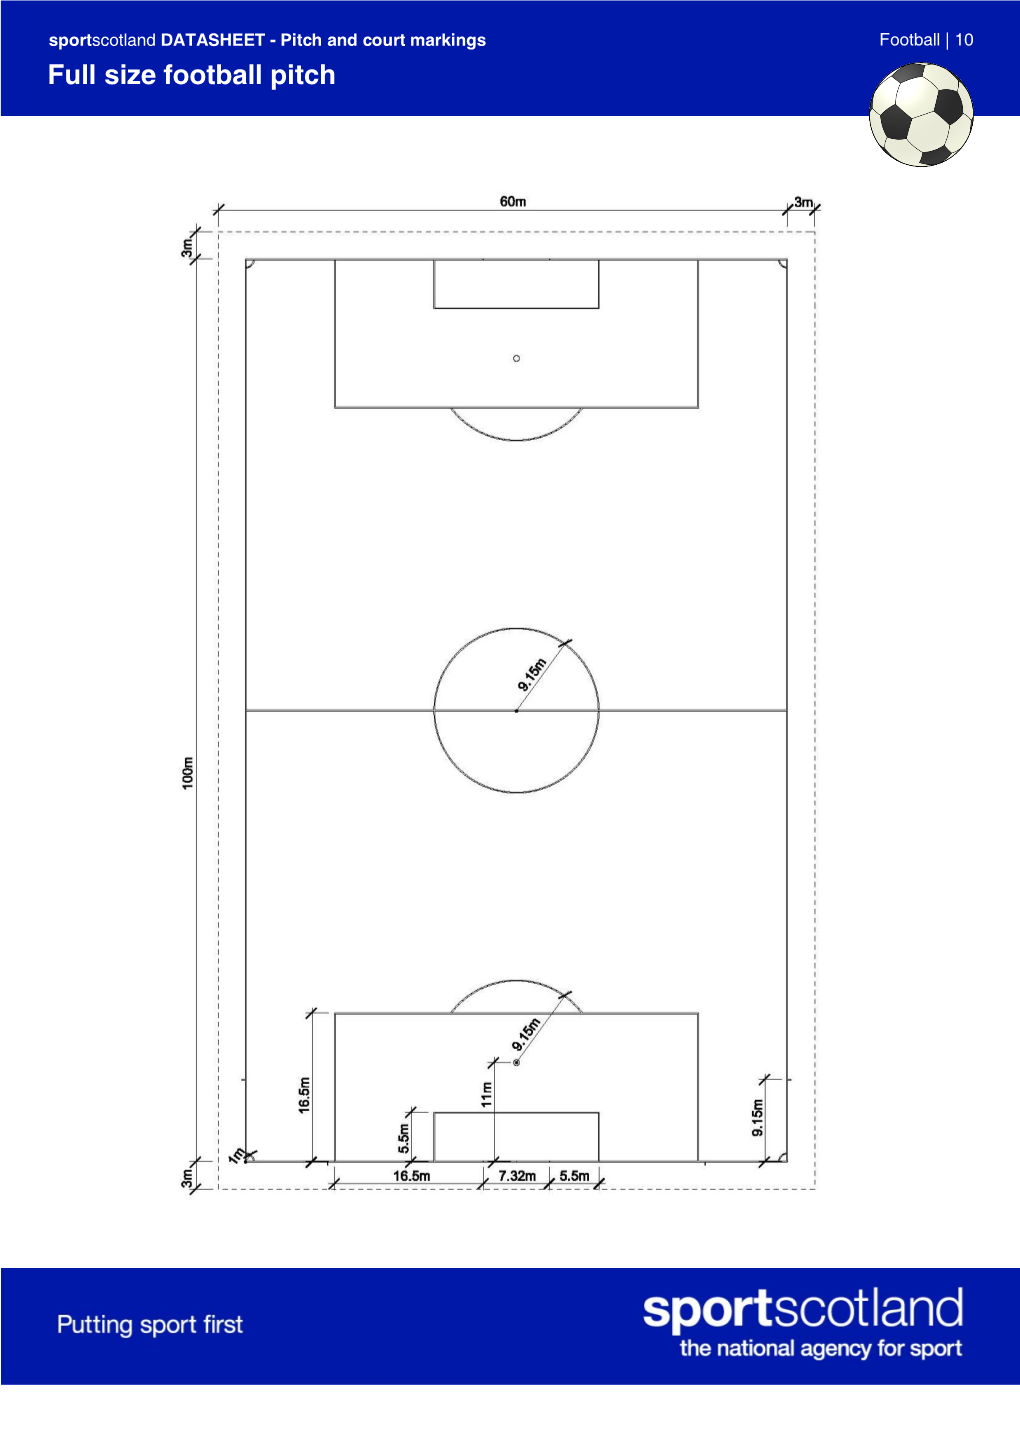 Full Size Football Pitch Sportscotland DATASHEET - Pitch and Court Markings Football |10